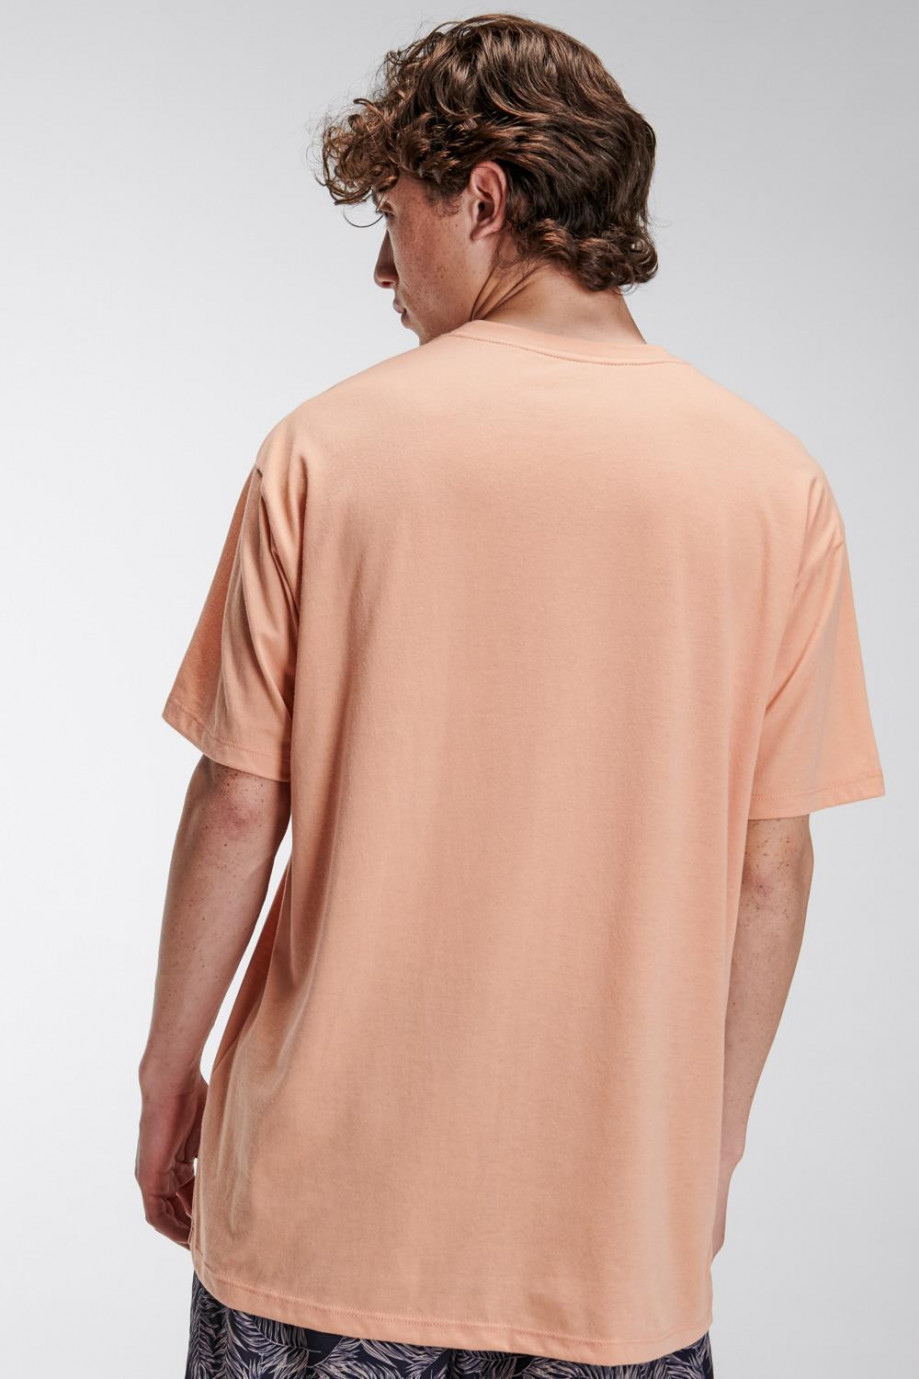 Camiseta estampada, cuello redondo, manga corta con bordado en frente